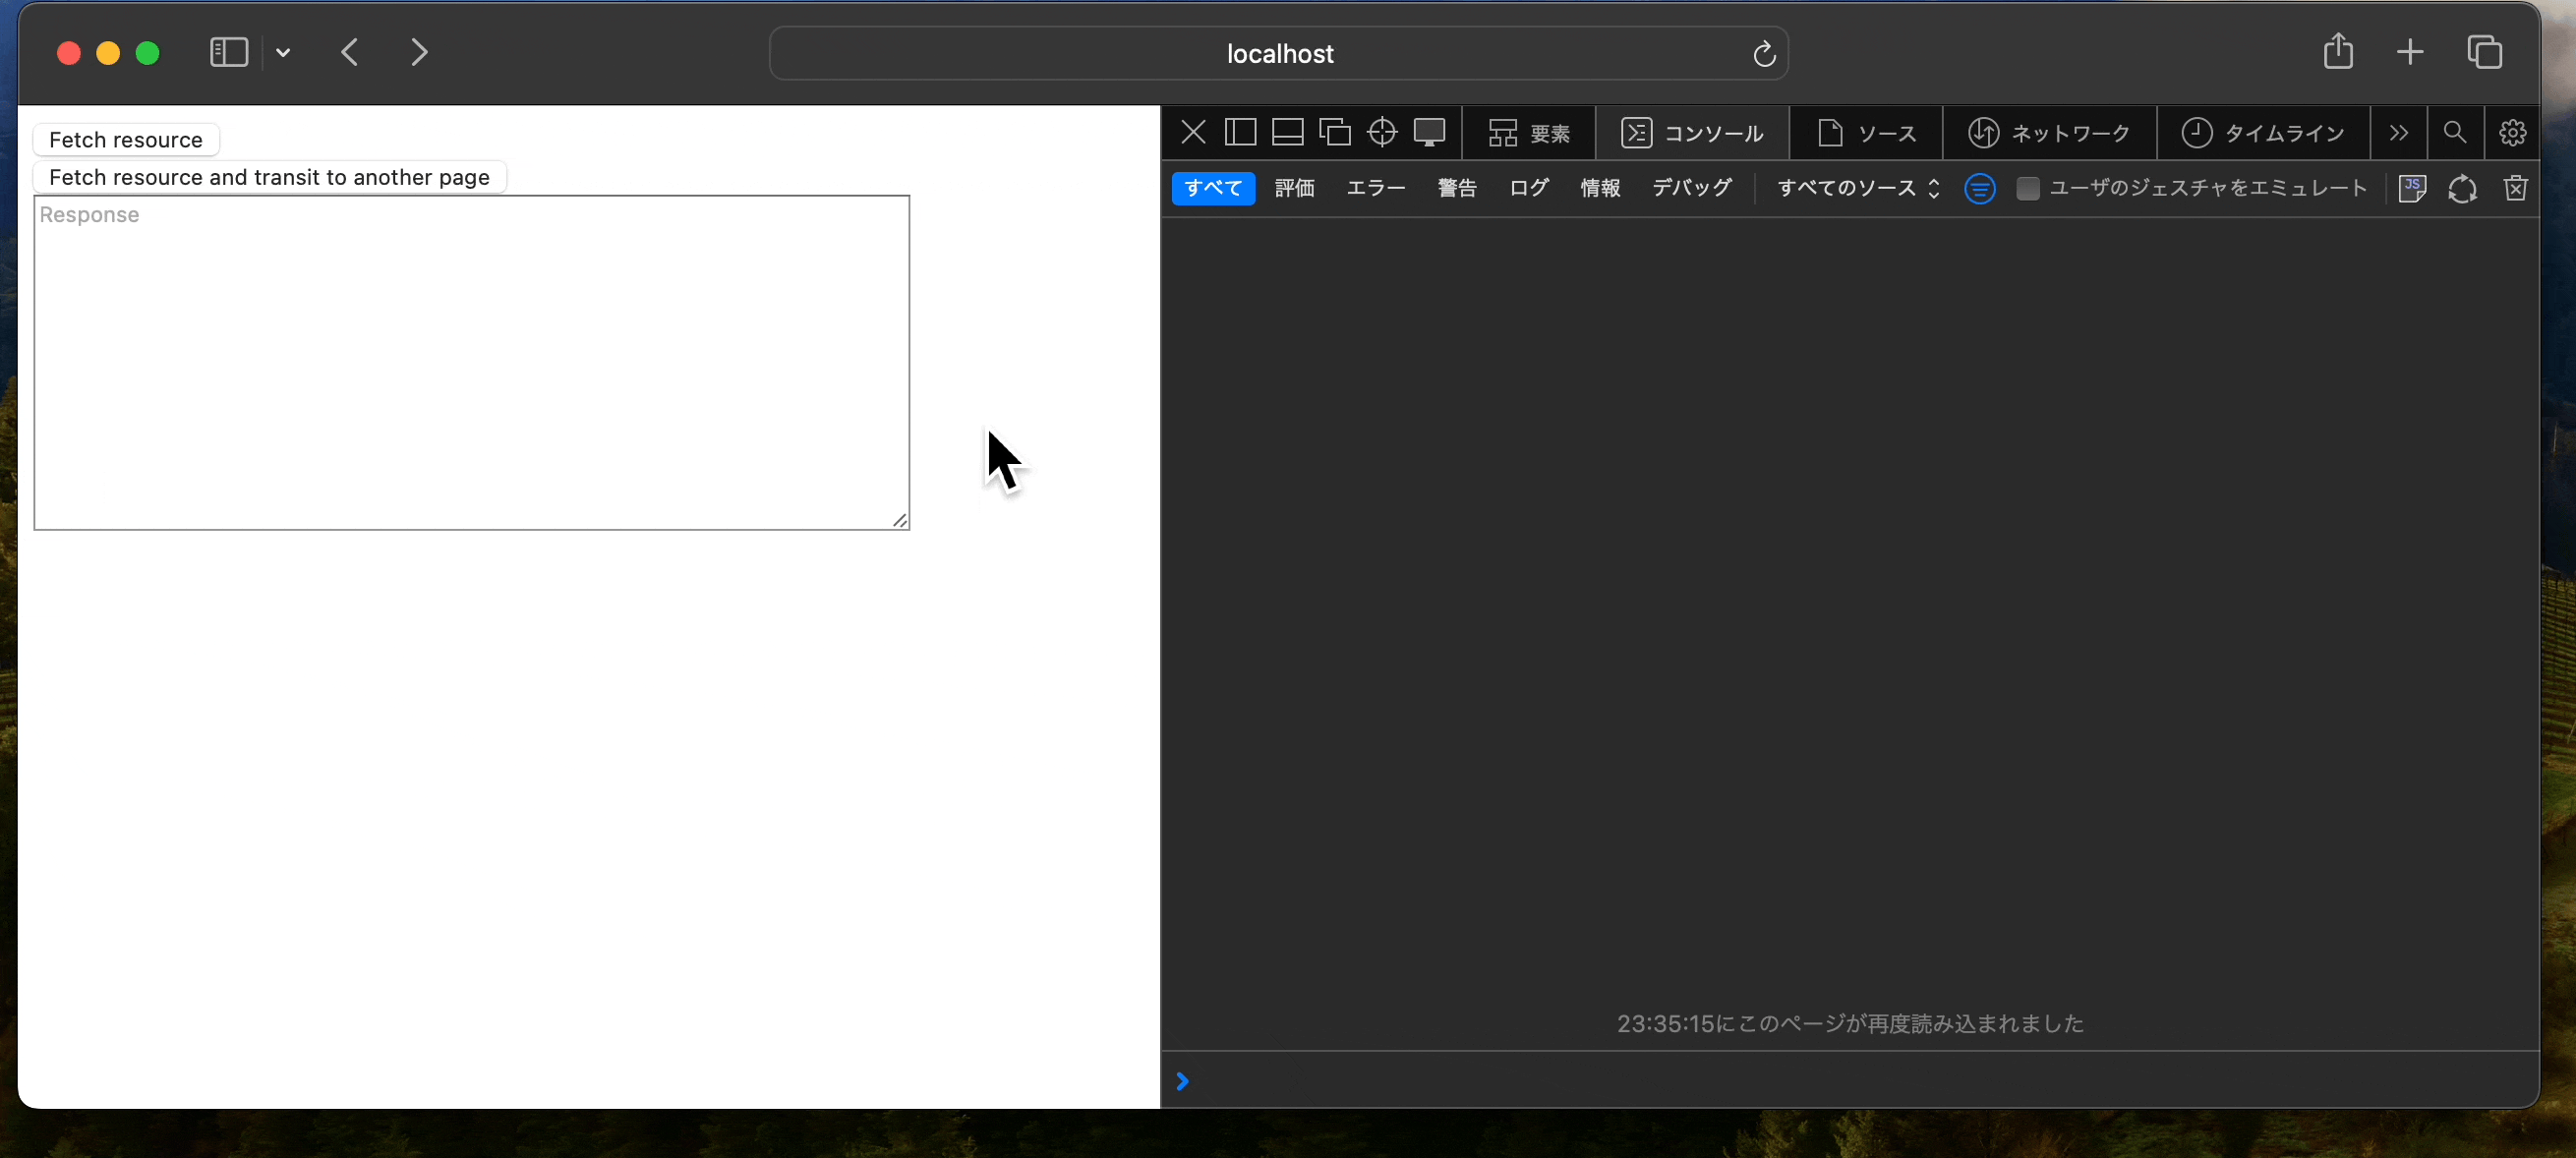 Safari を用いて fetch 中にページ遷移した際の挙動をキャプチャした映像。ページ遷移した後ブラウザバックすると、エラーが画面に表示されている。